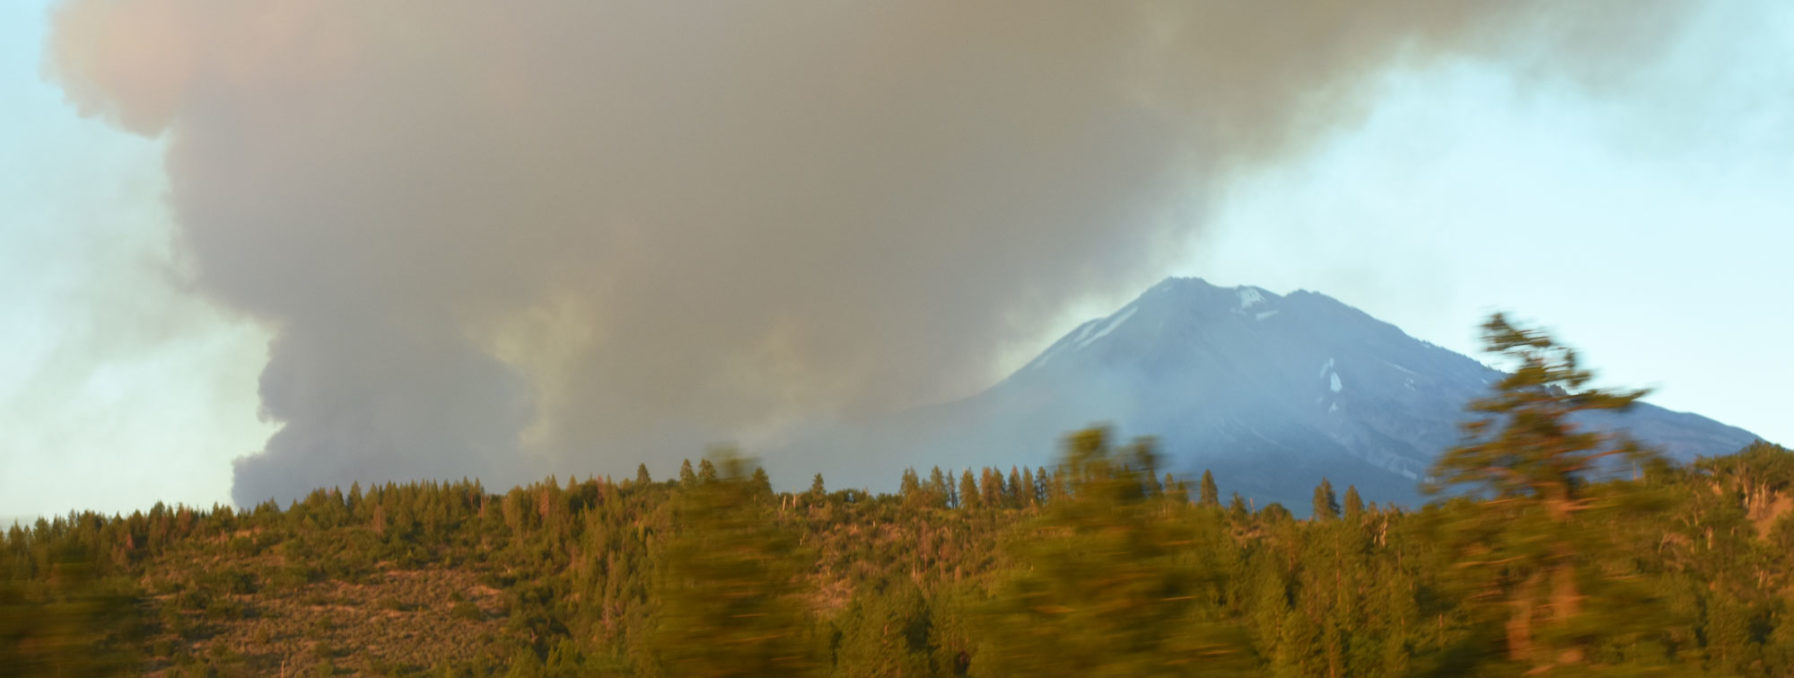 A plume of smoke over a mountain.